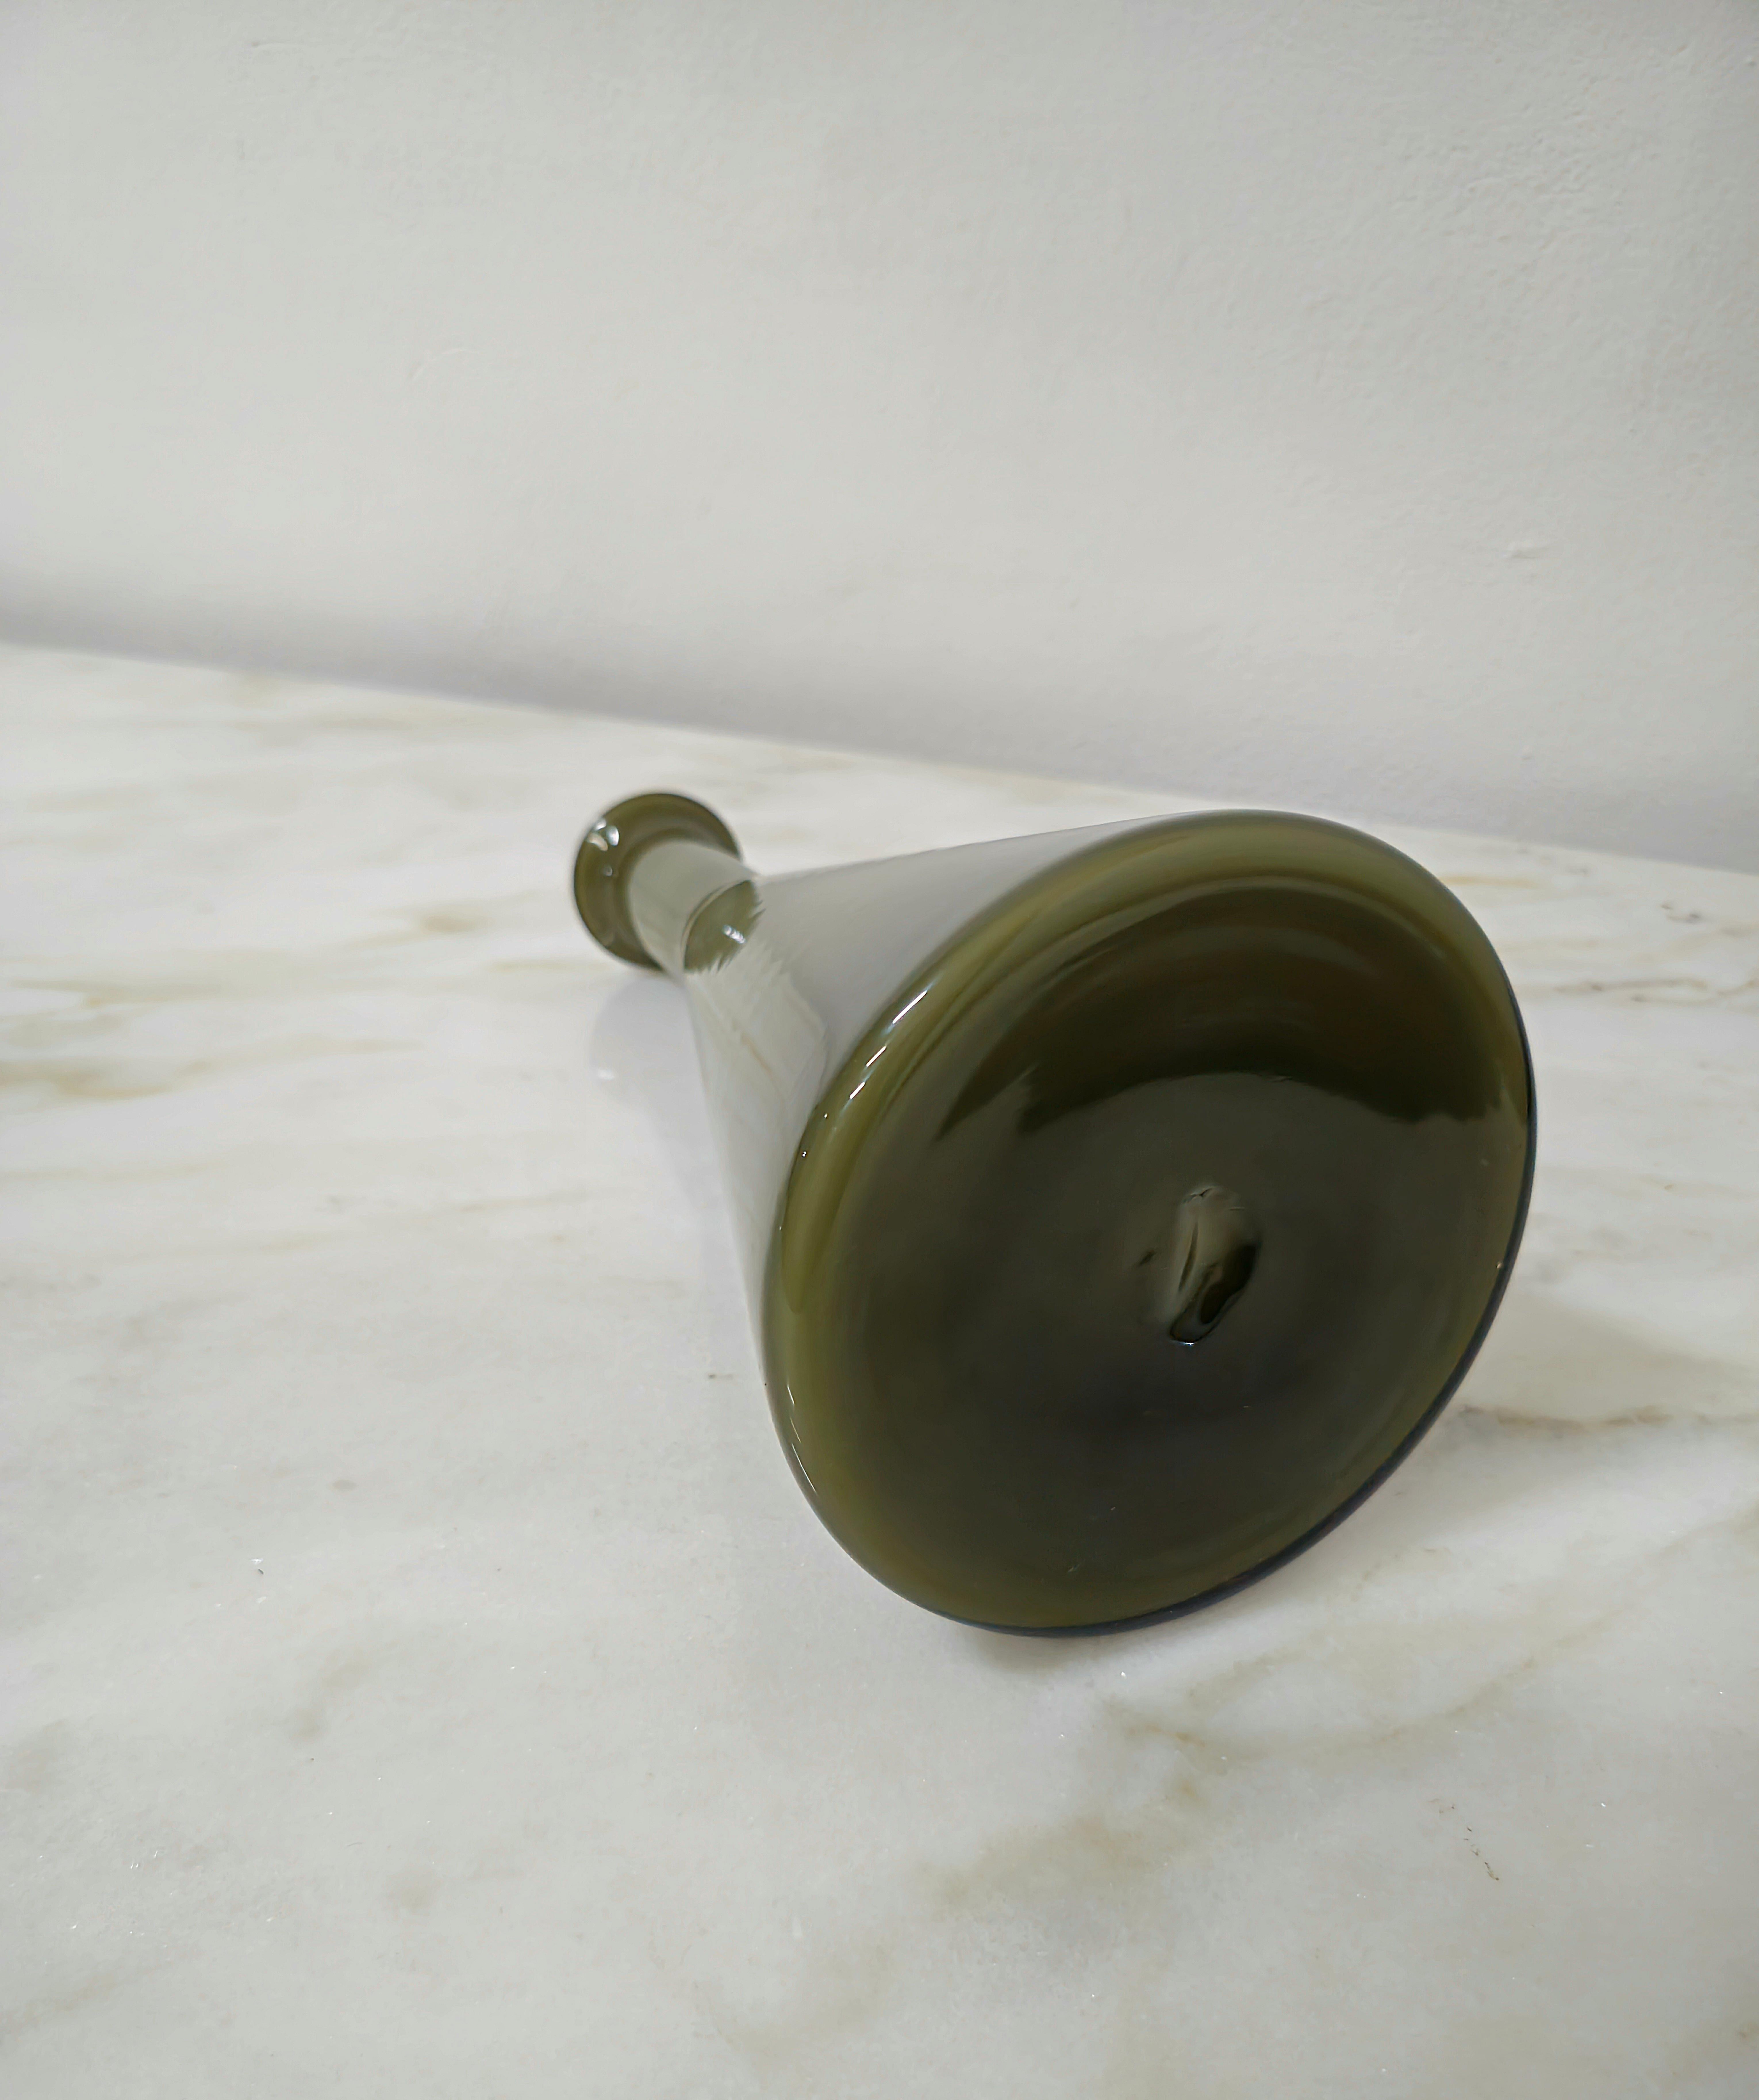 Vase Decorative Object Murano Glass Green Midcentury Modern Italian Design 1960s For Sale 3